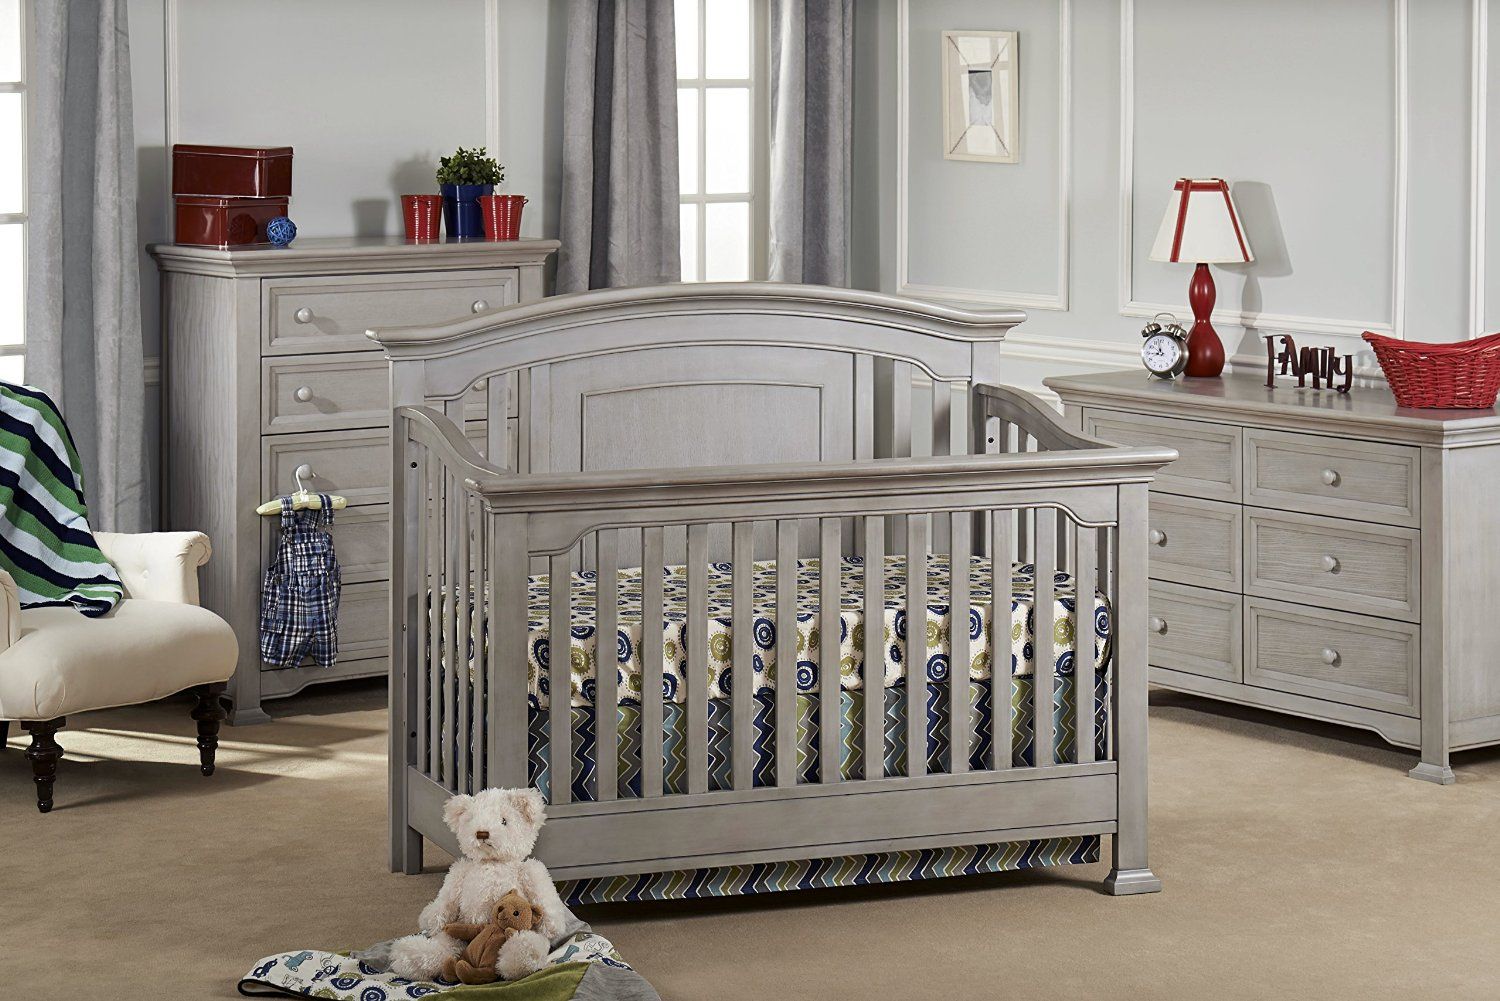 Medford Crib from Munire Baby Furniture – Project Nursery